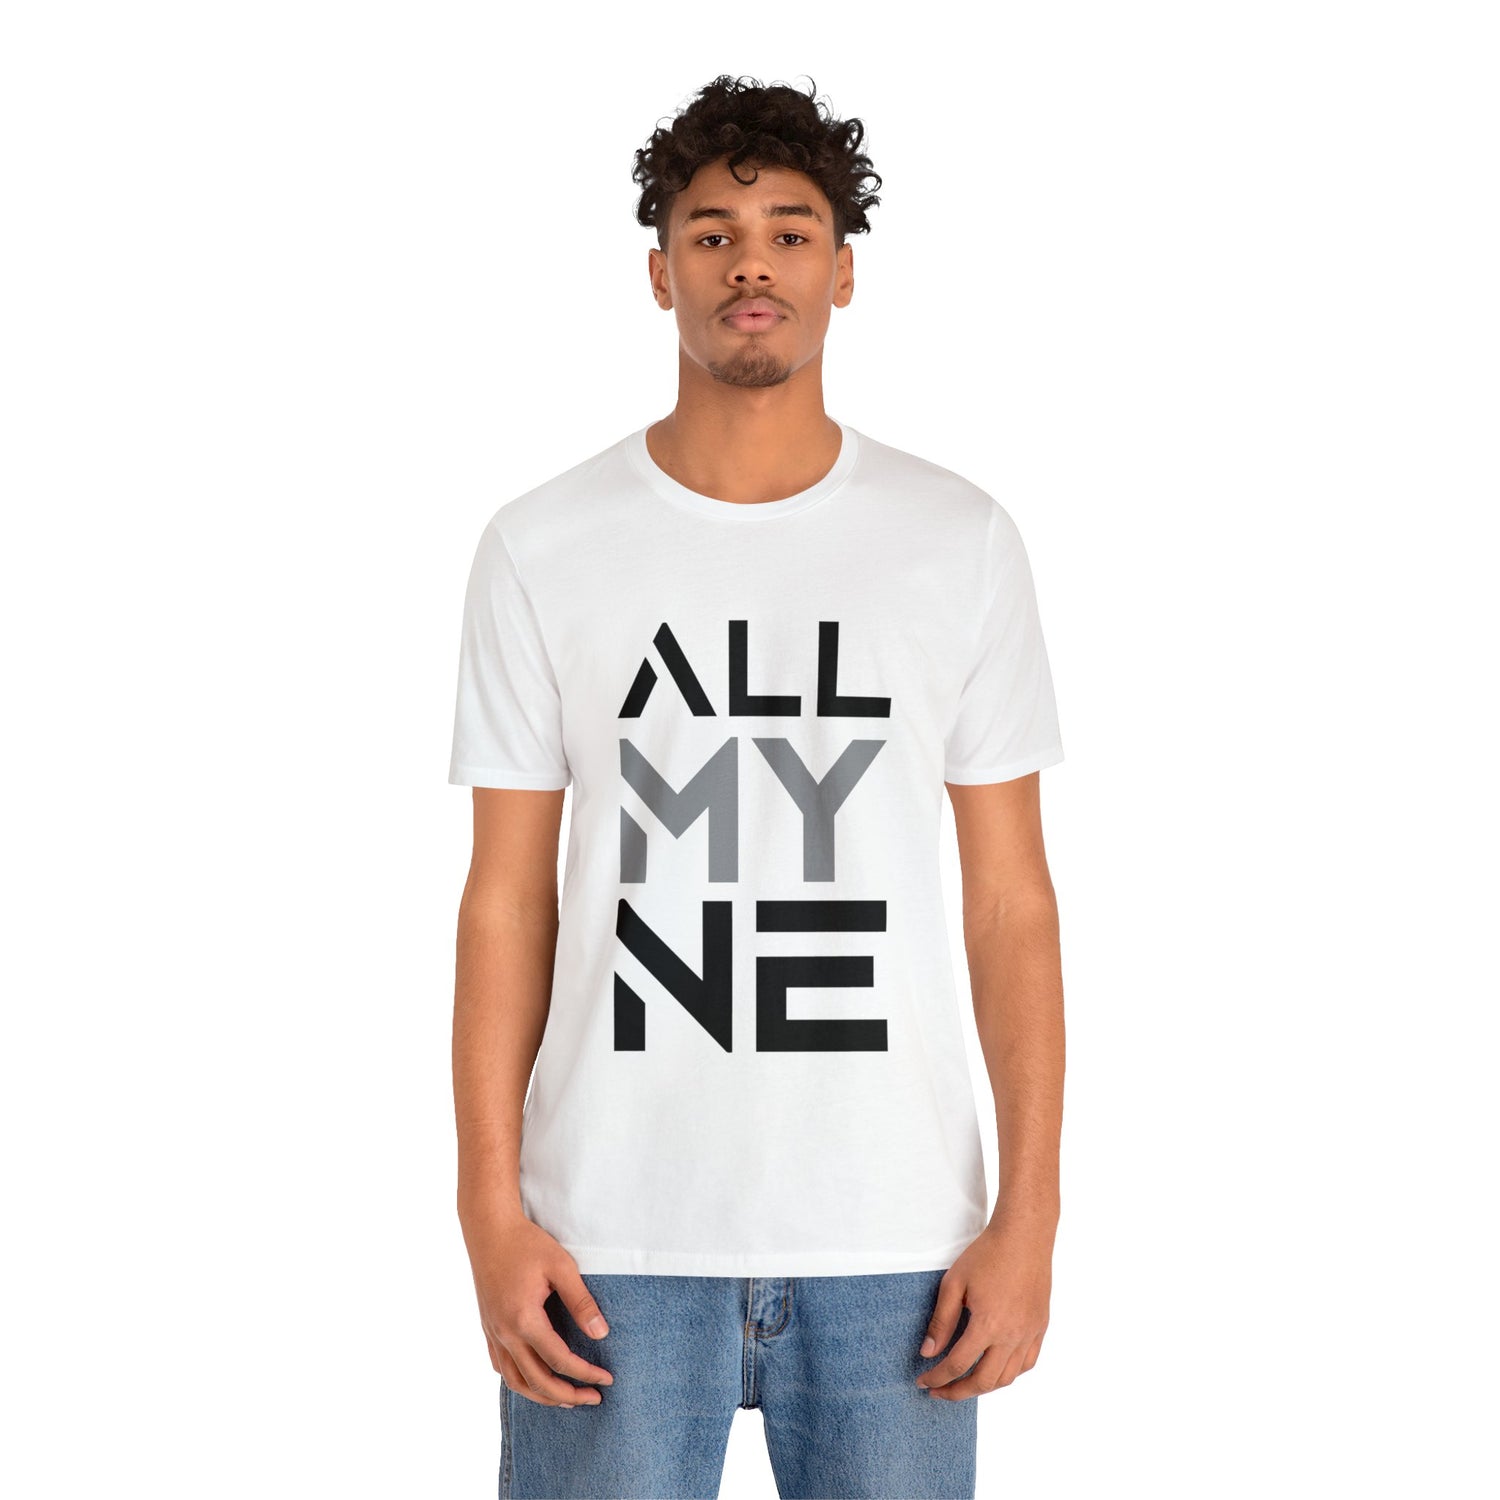 T-shirt ALLMYNE noir/gris